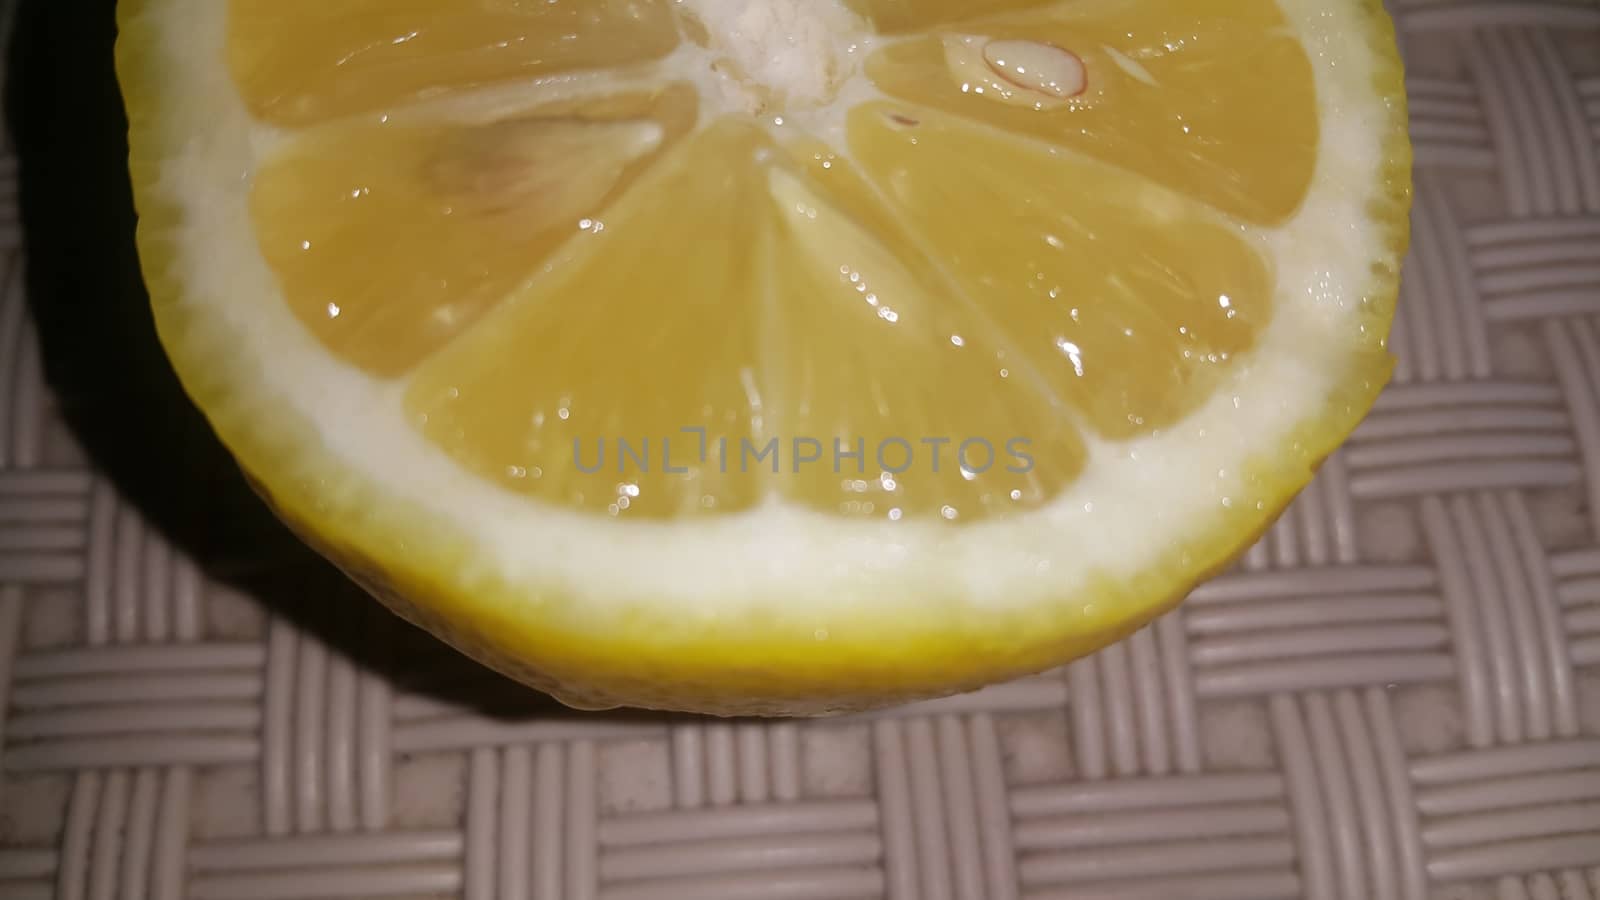 Fresh lemon slices with yellow peelings placed on a grey floor. Top view of fresh juicy lemon slice background